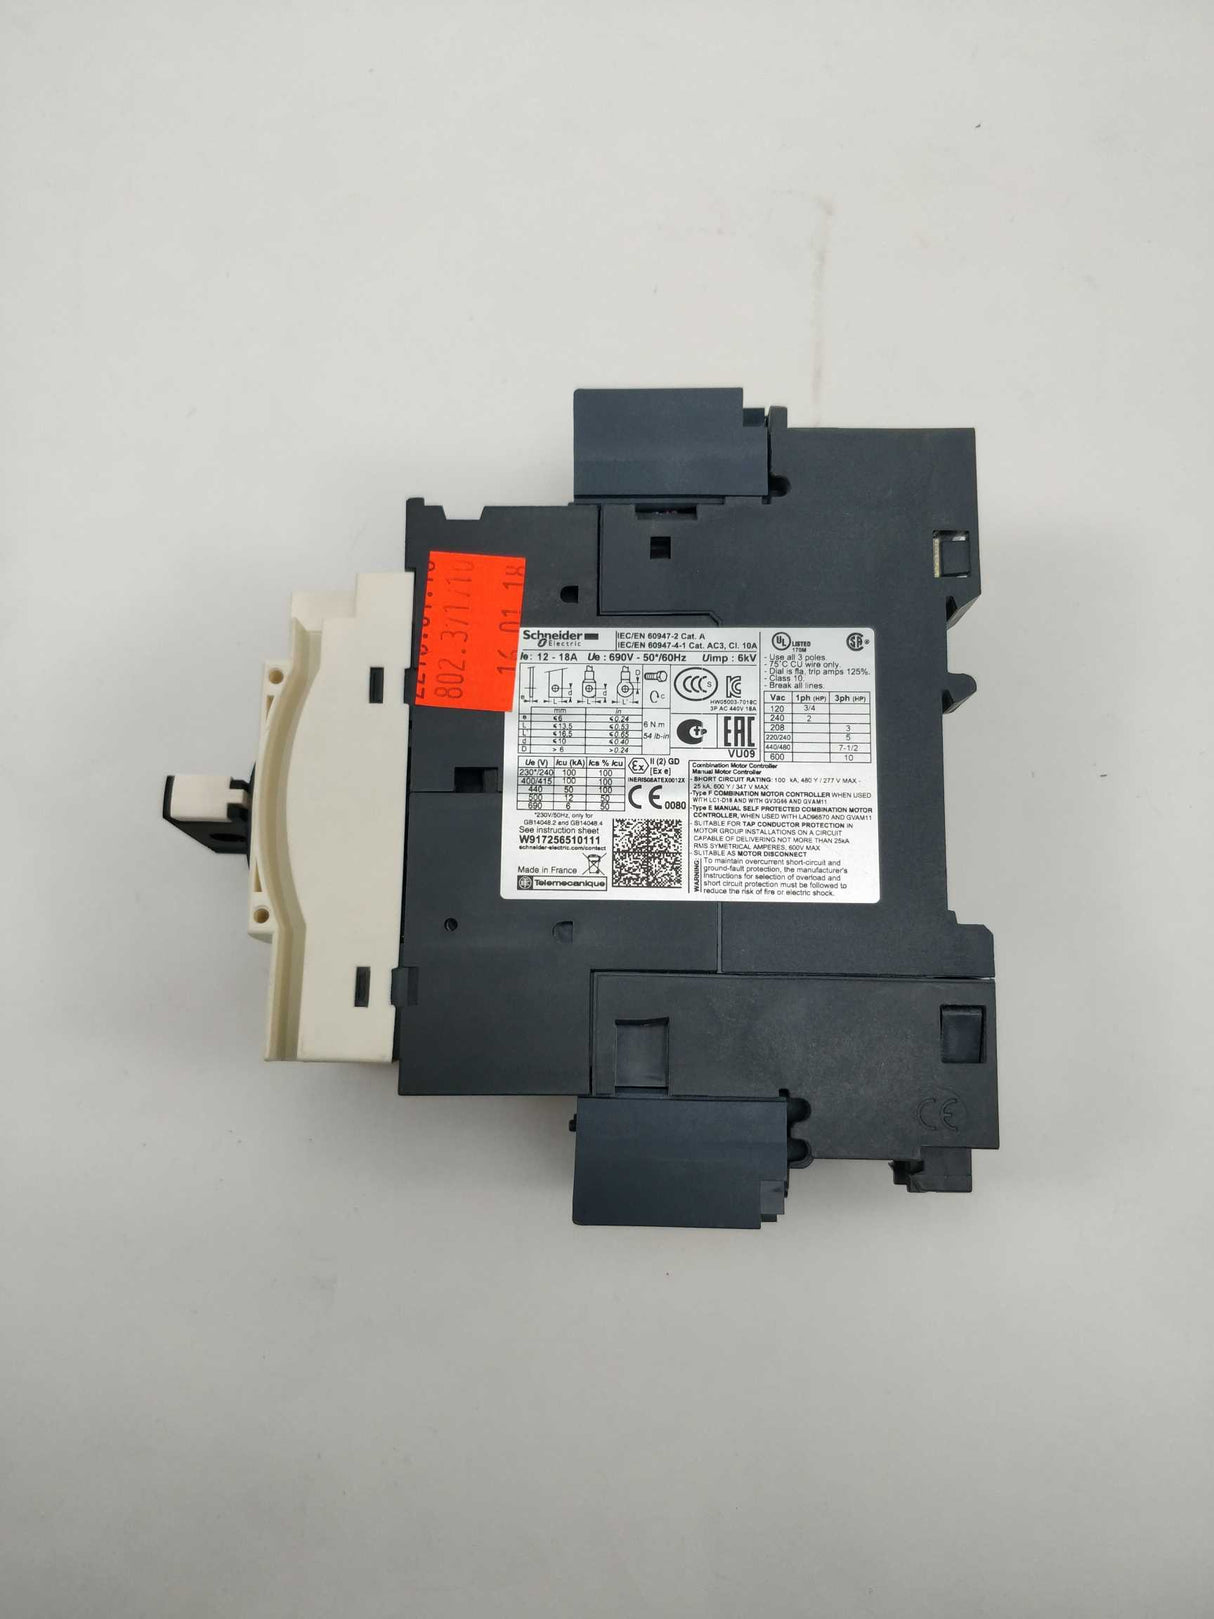 Schneider Electric GV3P186 12-18A Motor circuit breaker